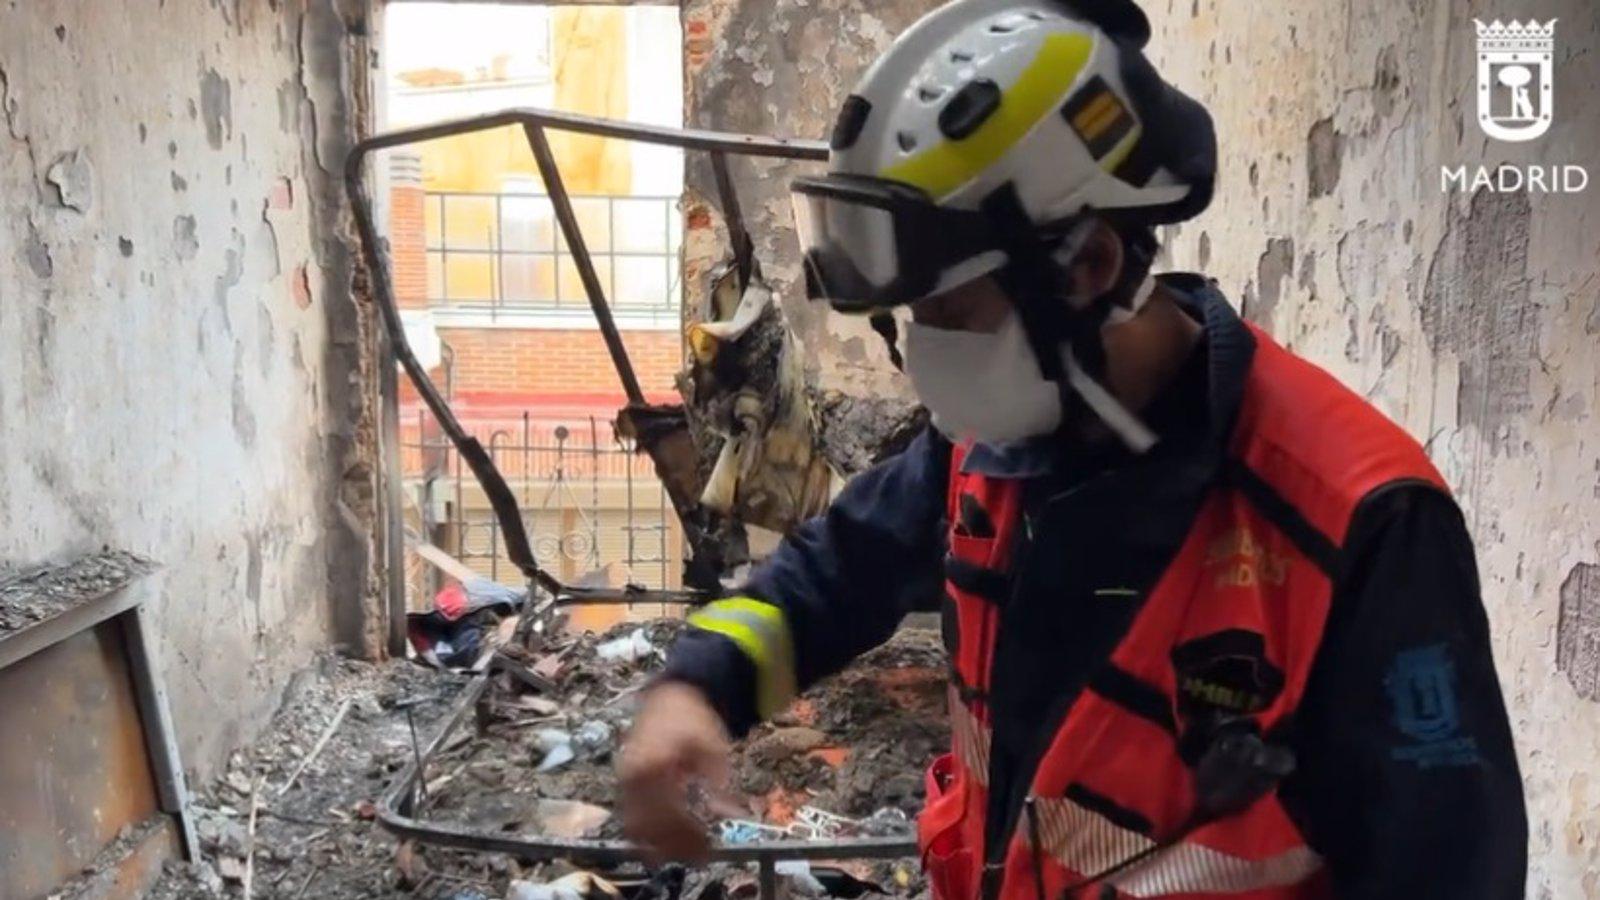  Aparatoso incendio en un último piso en un edificio de Tetuán sin víctimas